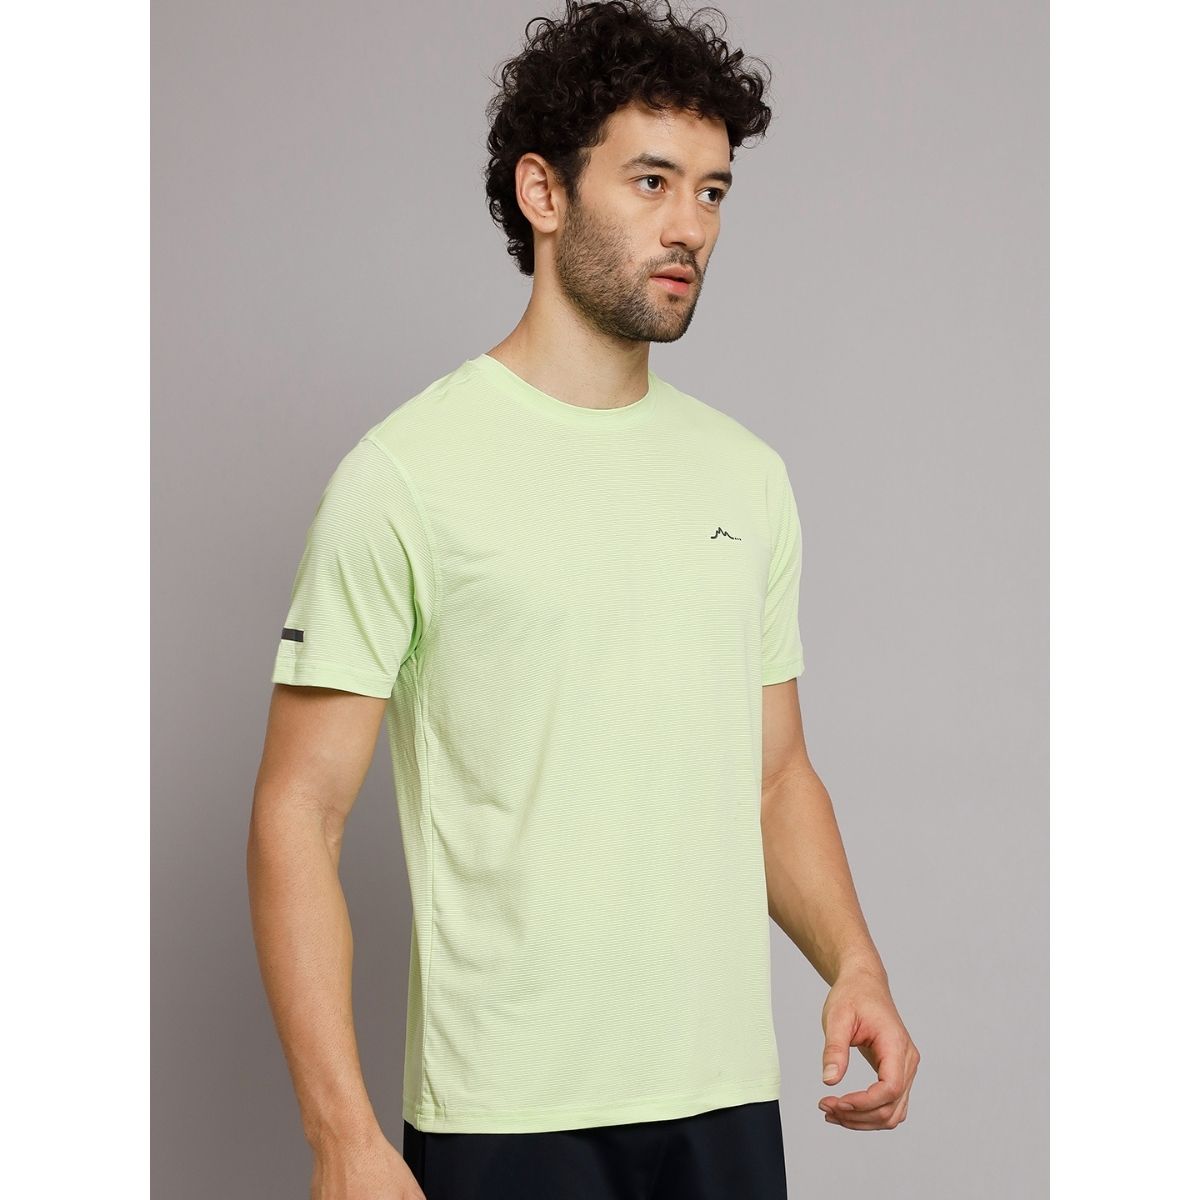 Men's Ultralight Athletic Half Sleeves T-Shirt - Lime 5